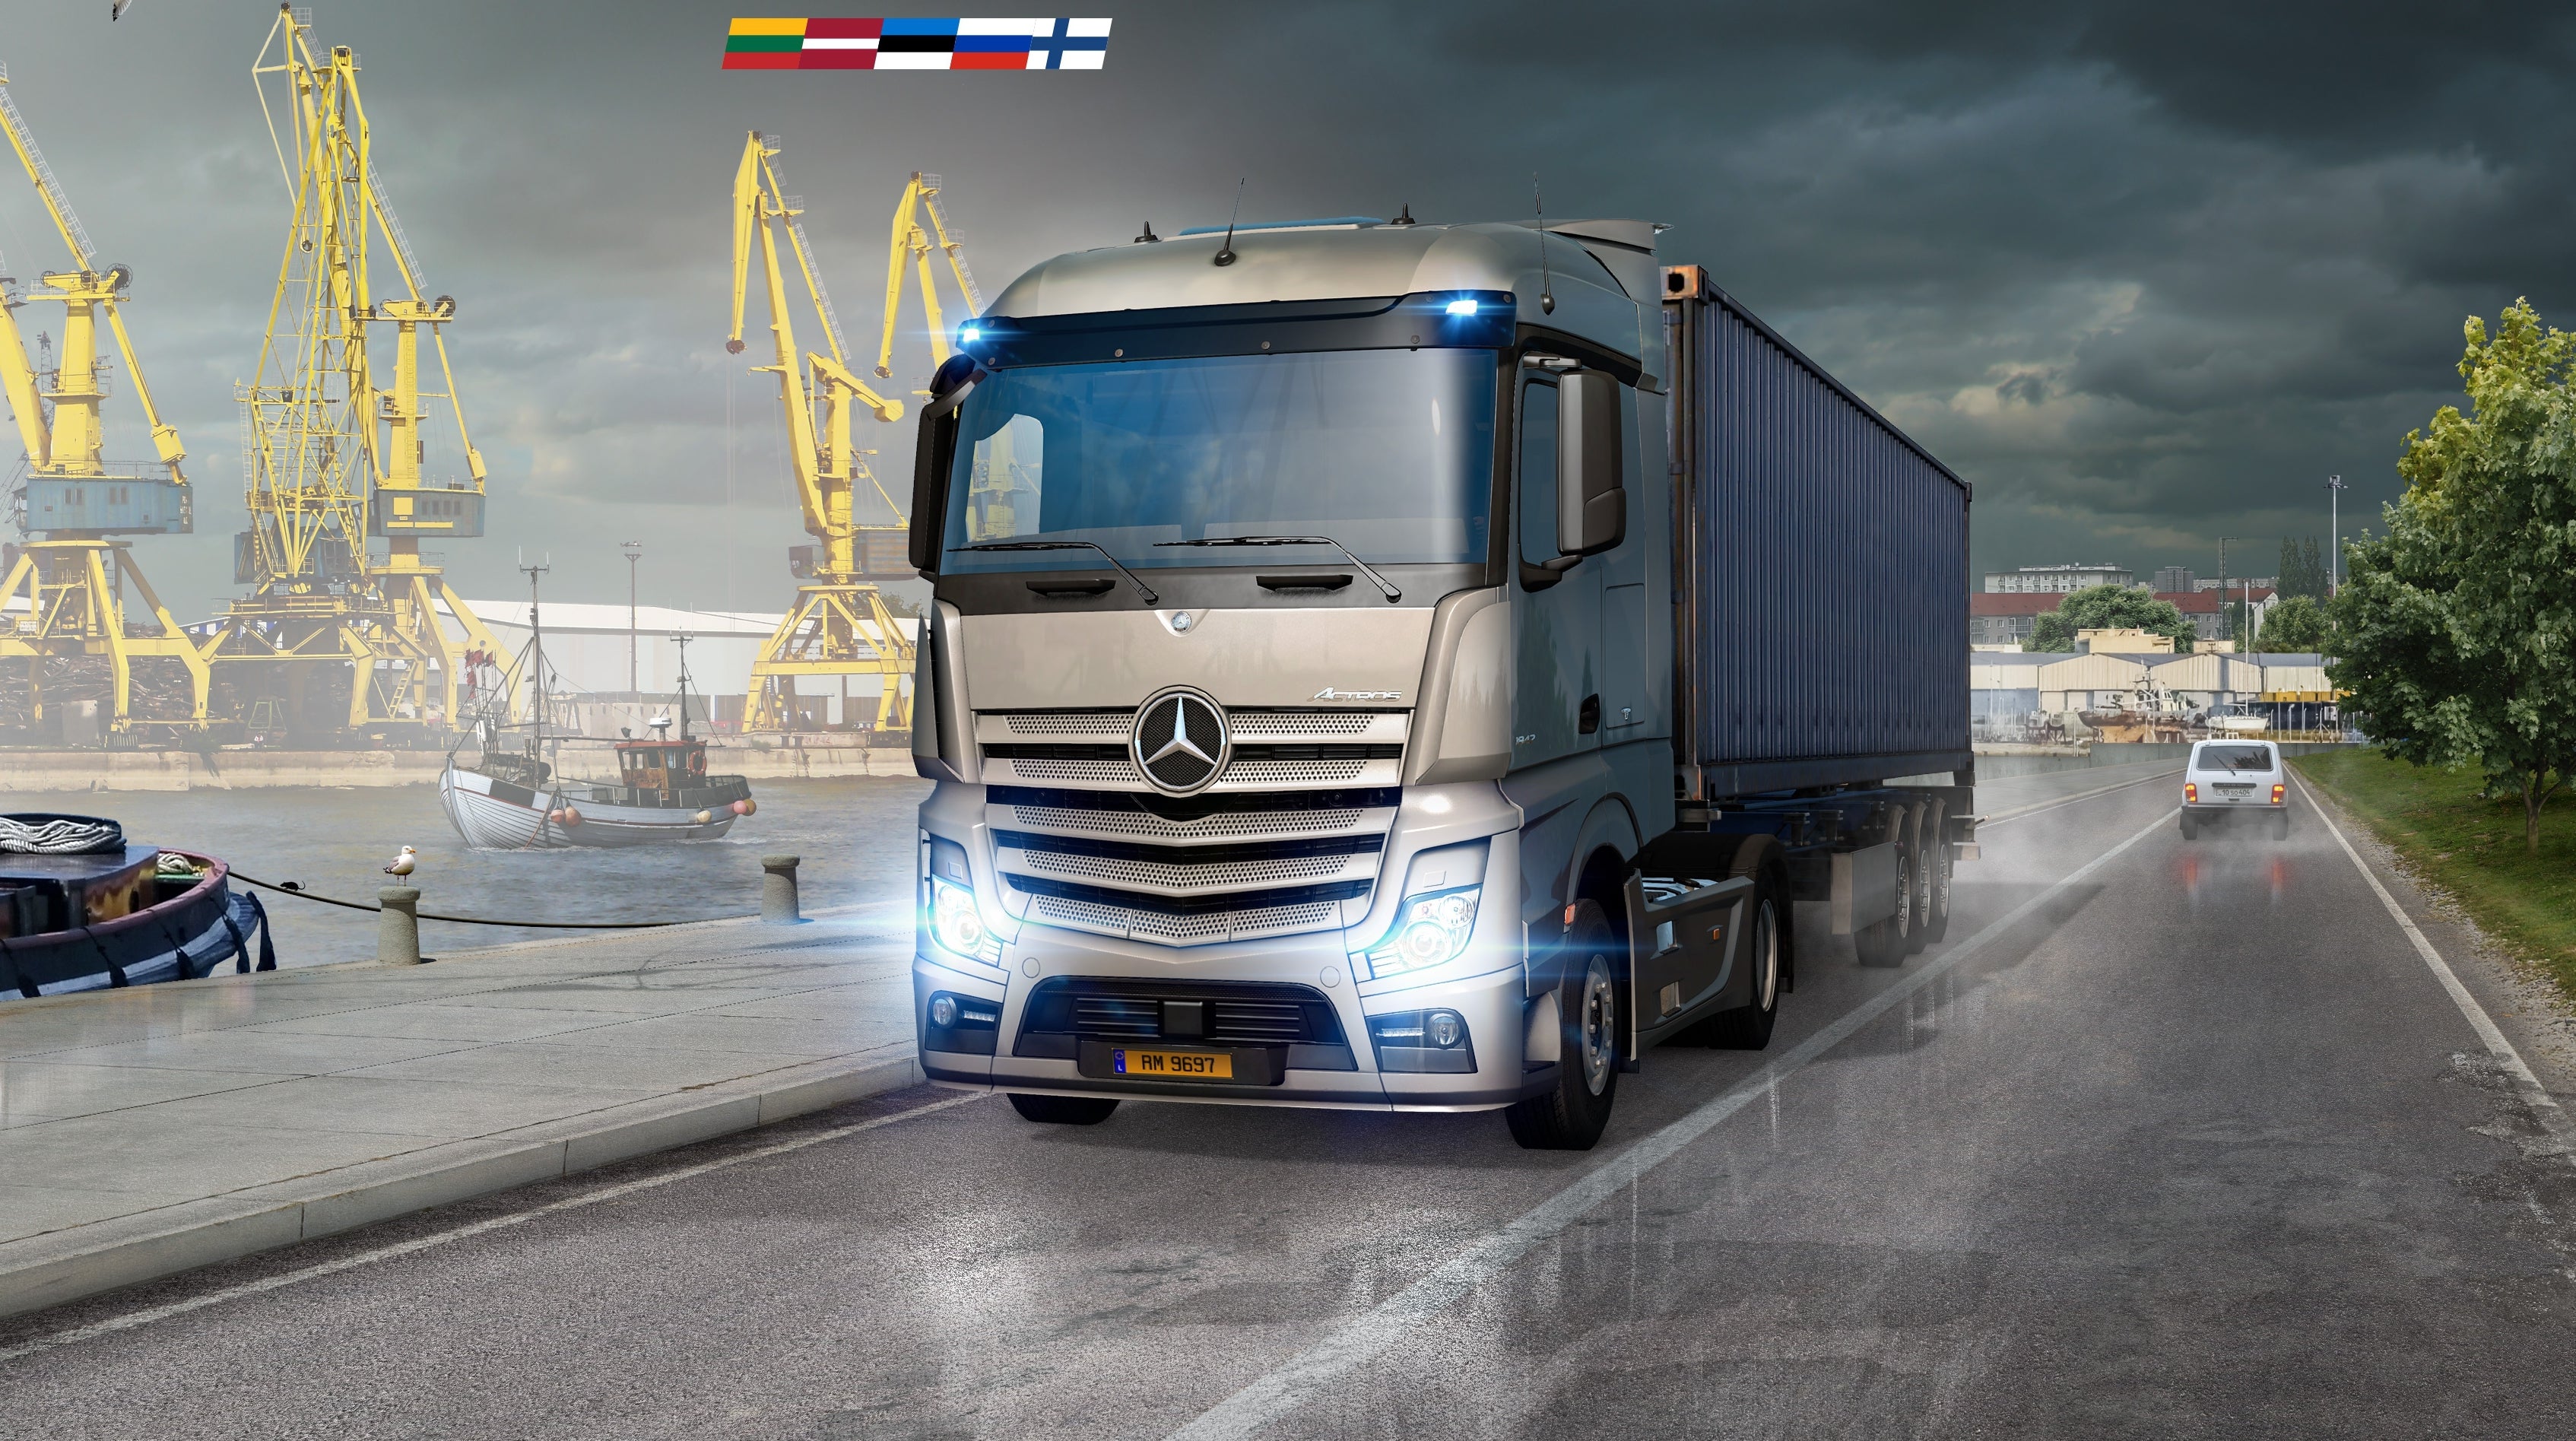 Image for RECENZE datadisku Pobaltí do Euro Truck Simulator 2